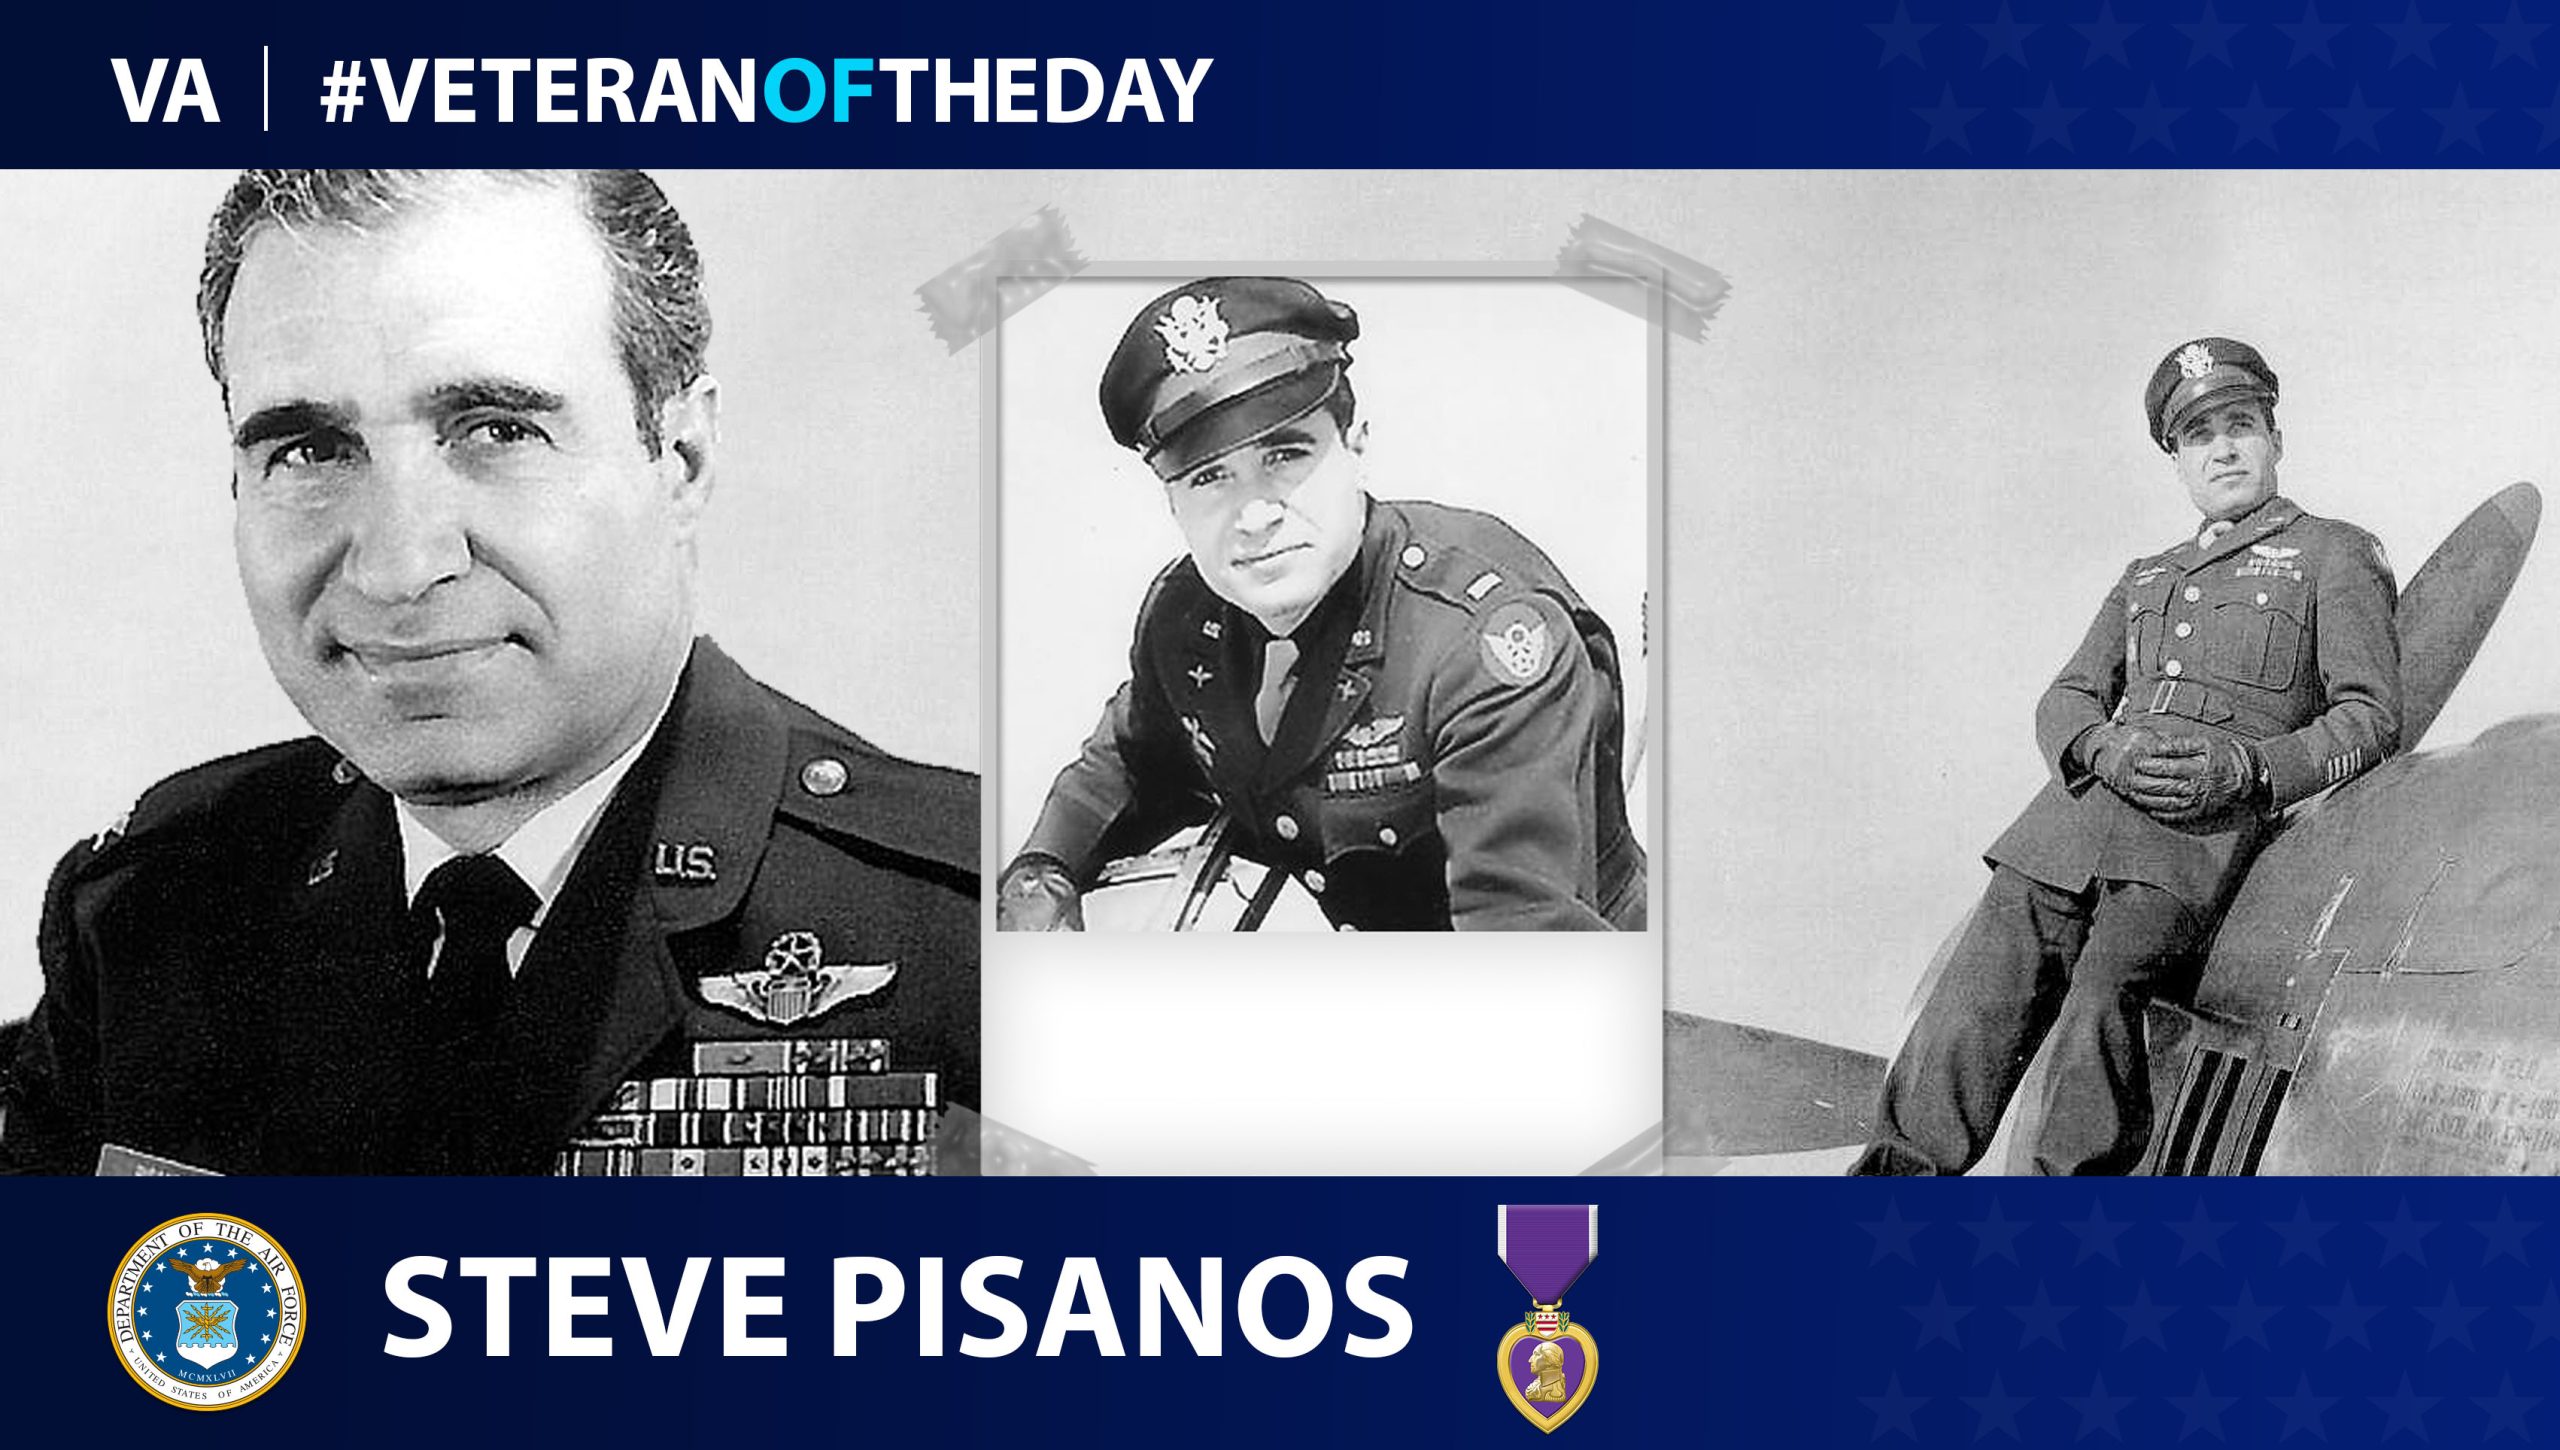 Air Force Veteran Spiros “Steve” Pisanos is today’s Veteran of the Day.